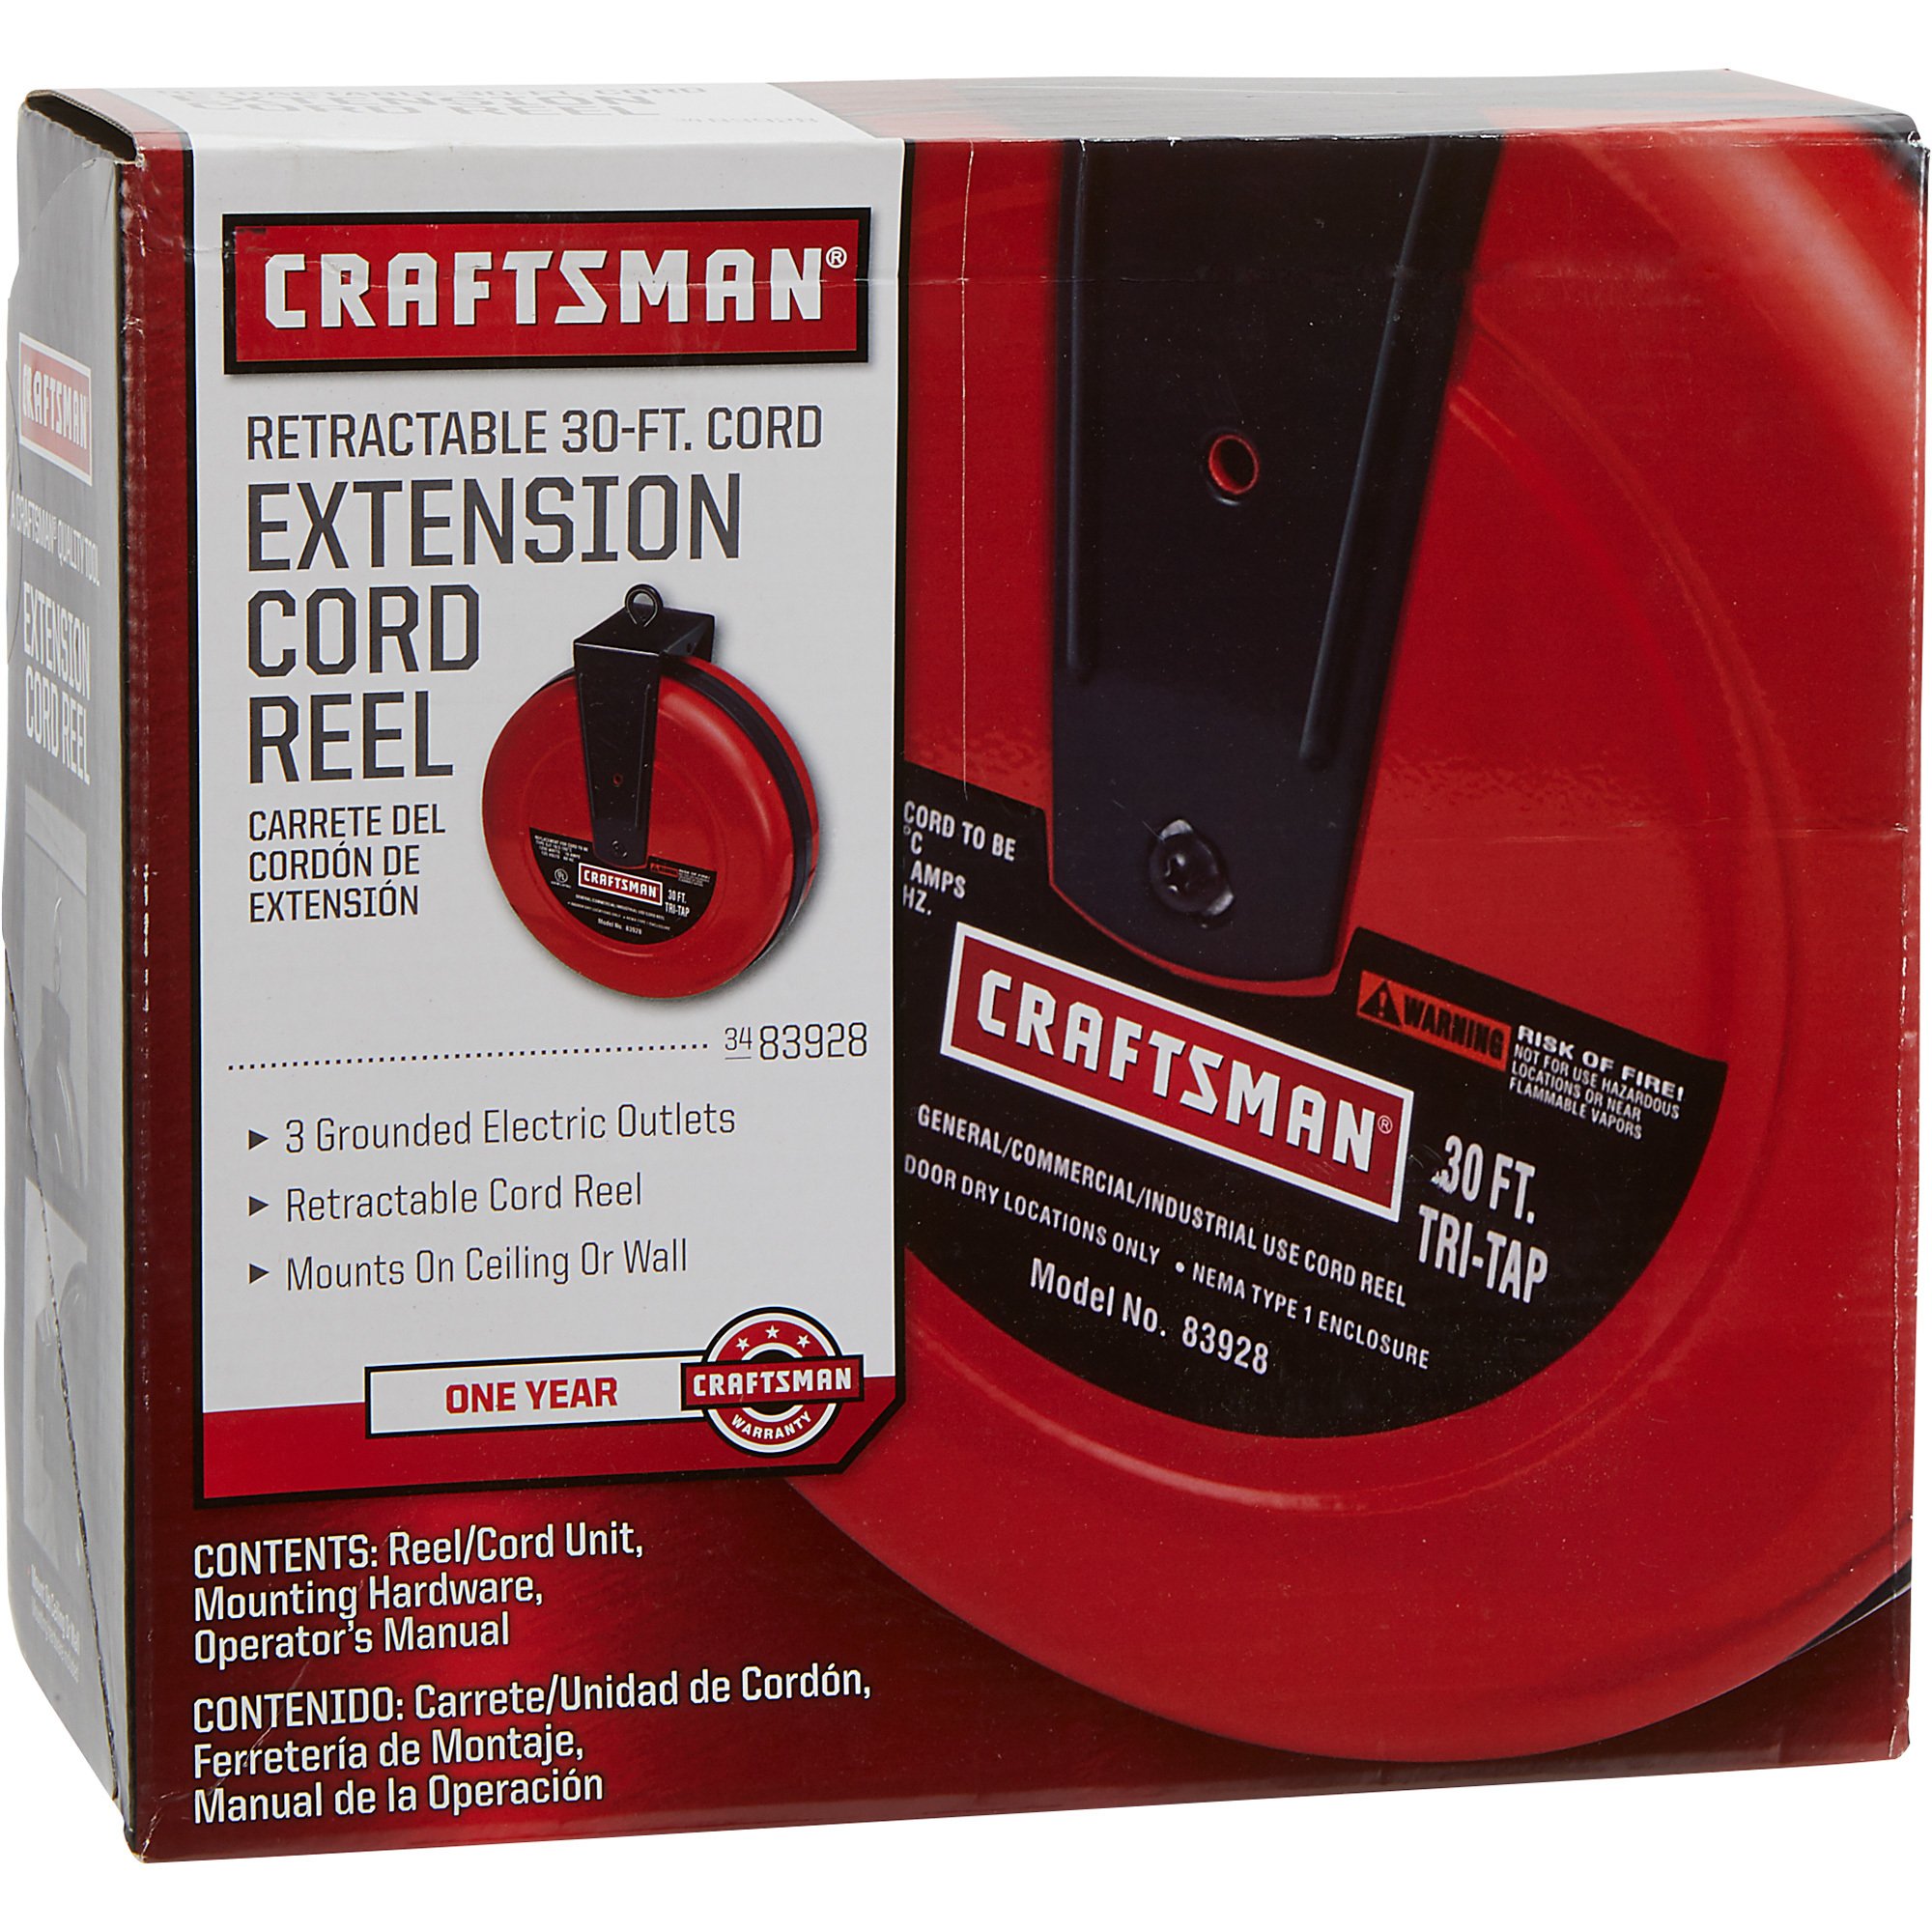 Craftsman Retractable 30-Ft. Extension Cord Reel, Model# 3483928